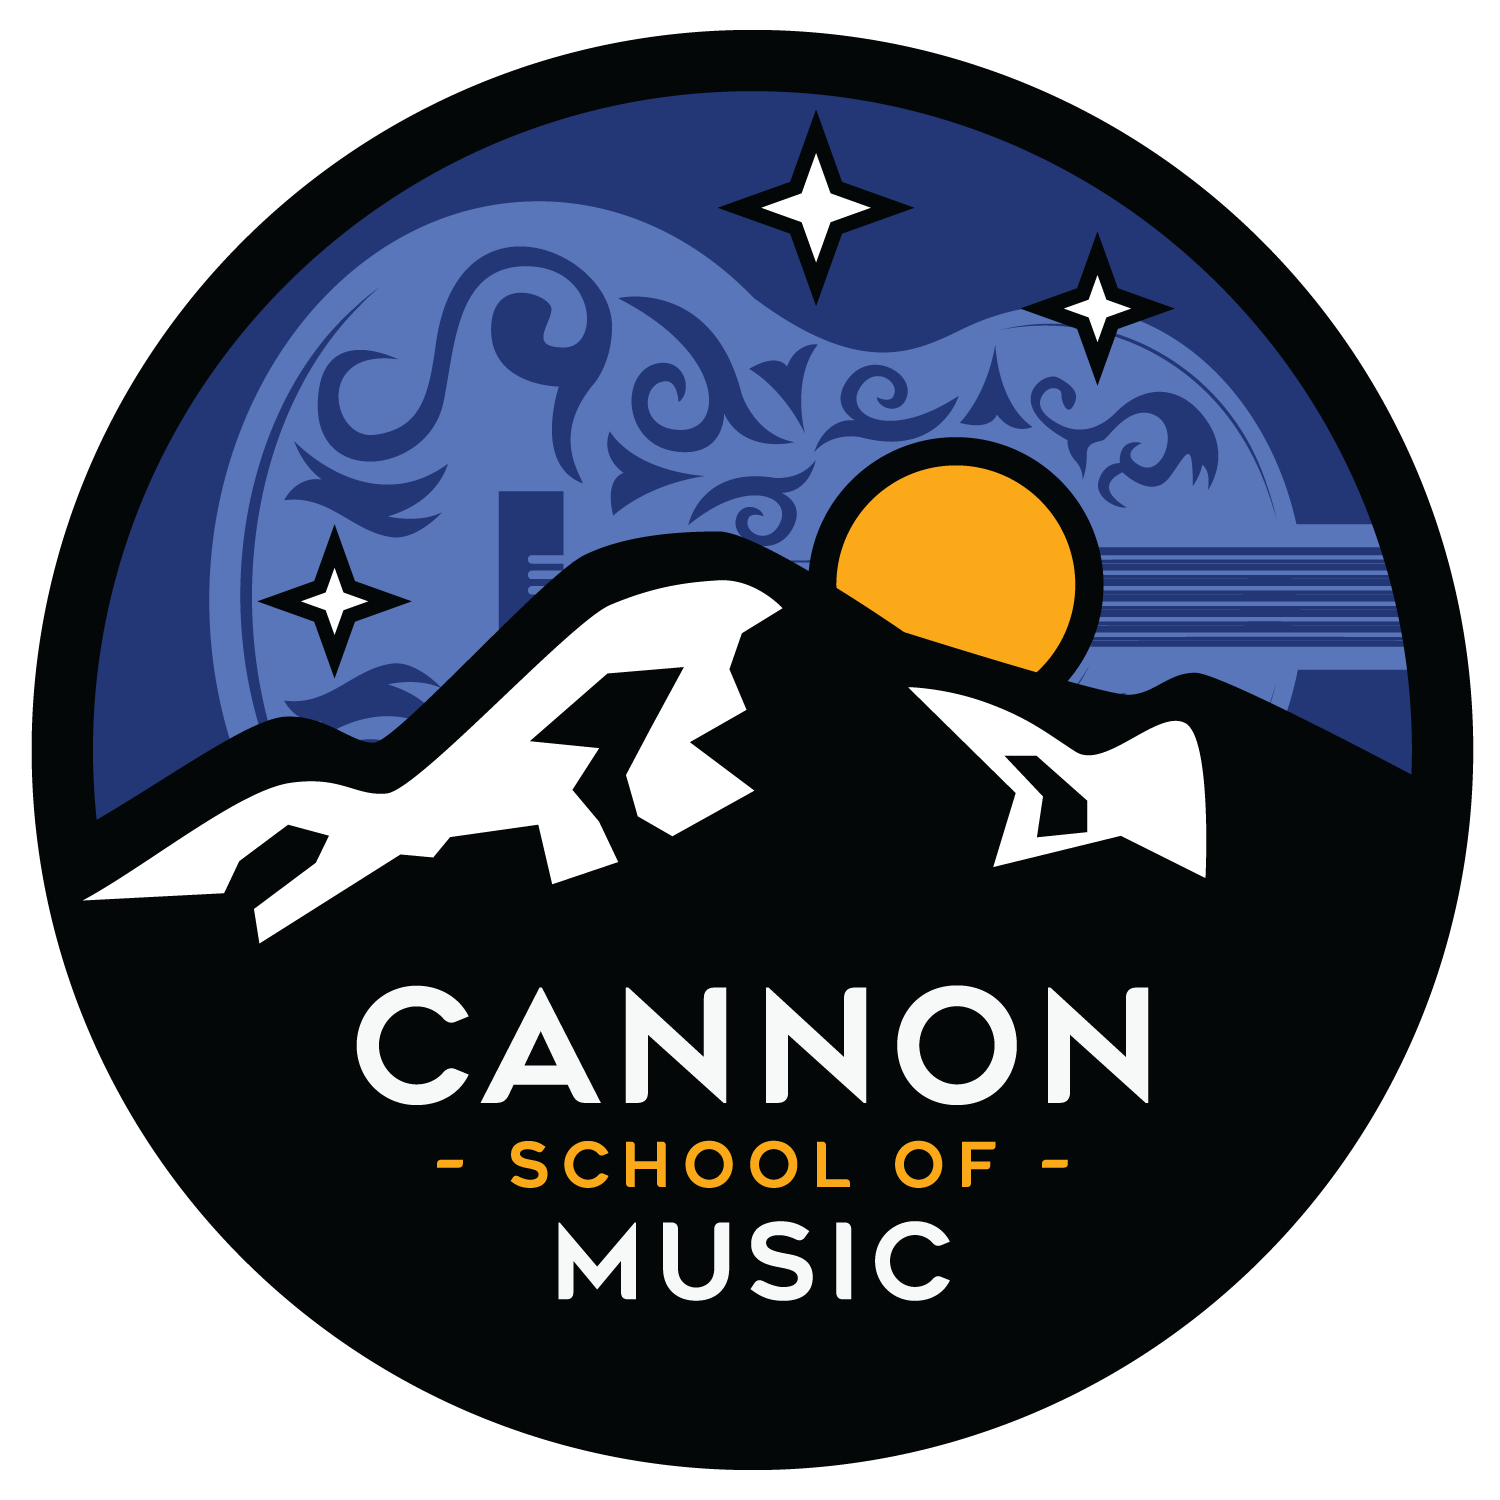 Cannon School of Music